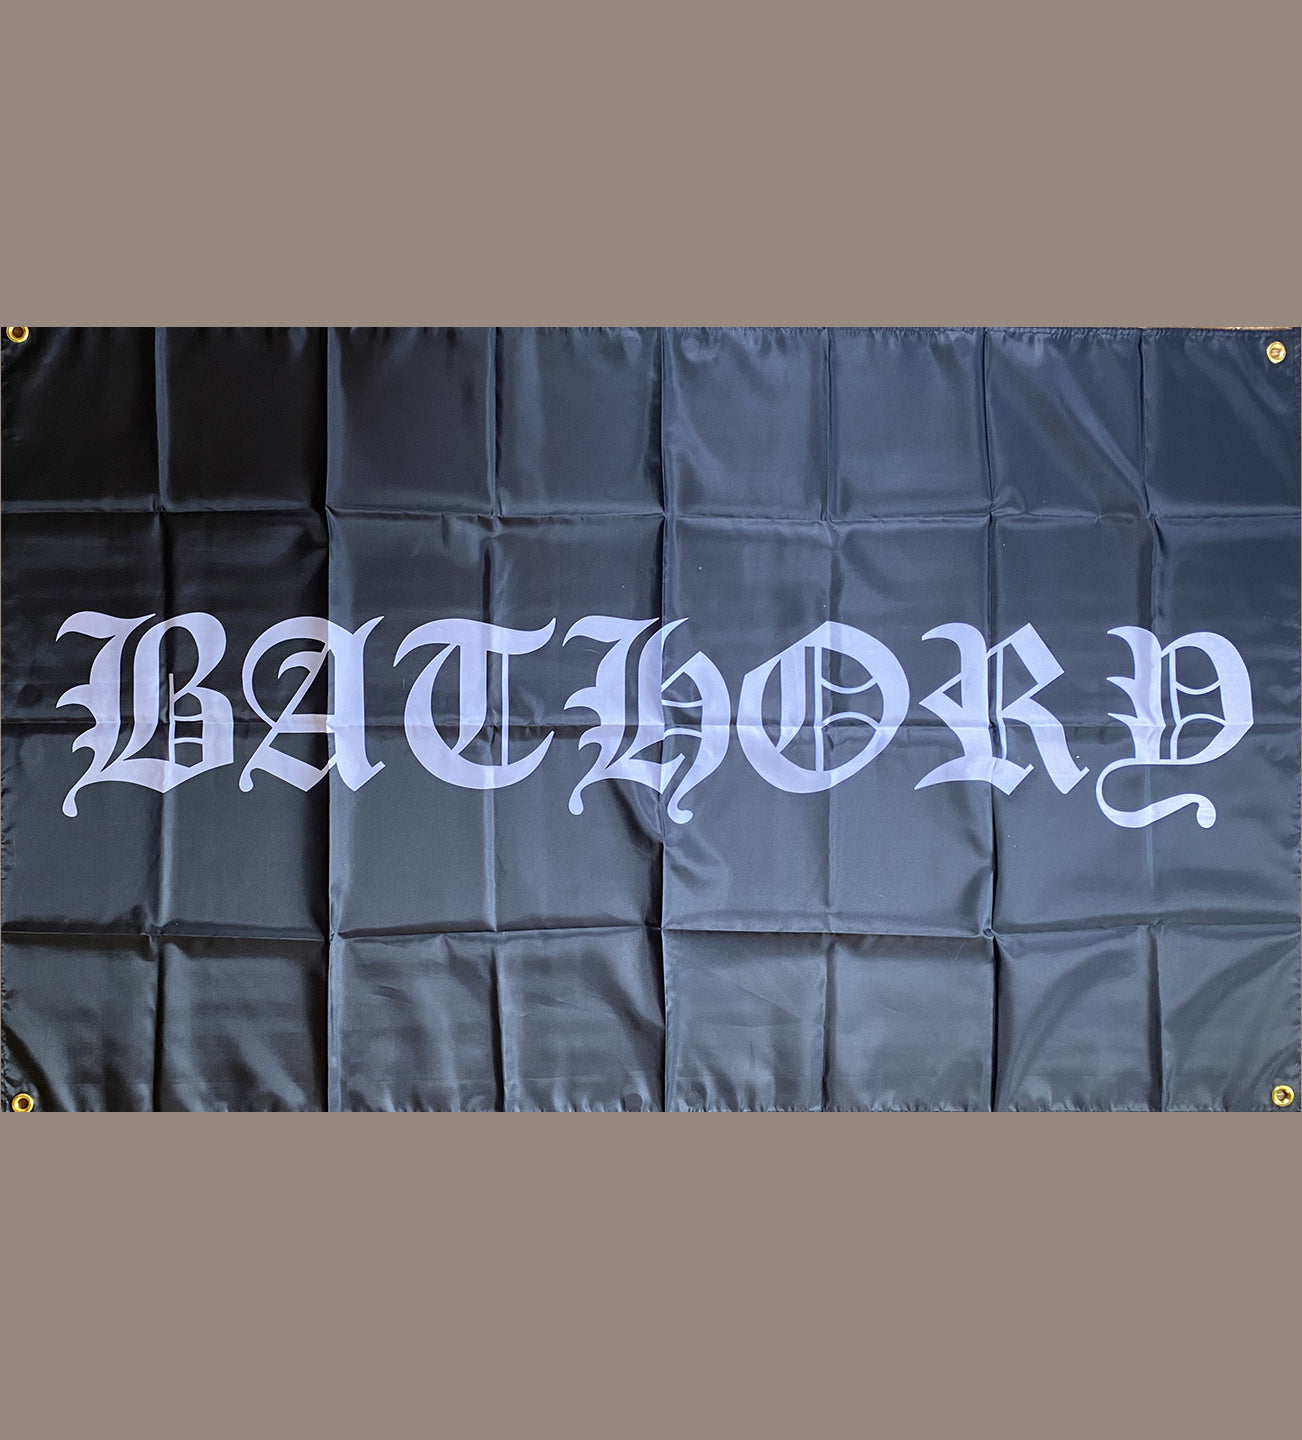 Bathory logo tapestry flag shirt yellow goat satanic thrash black metal